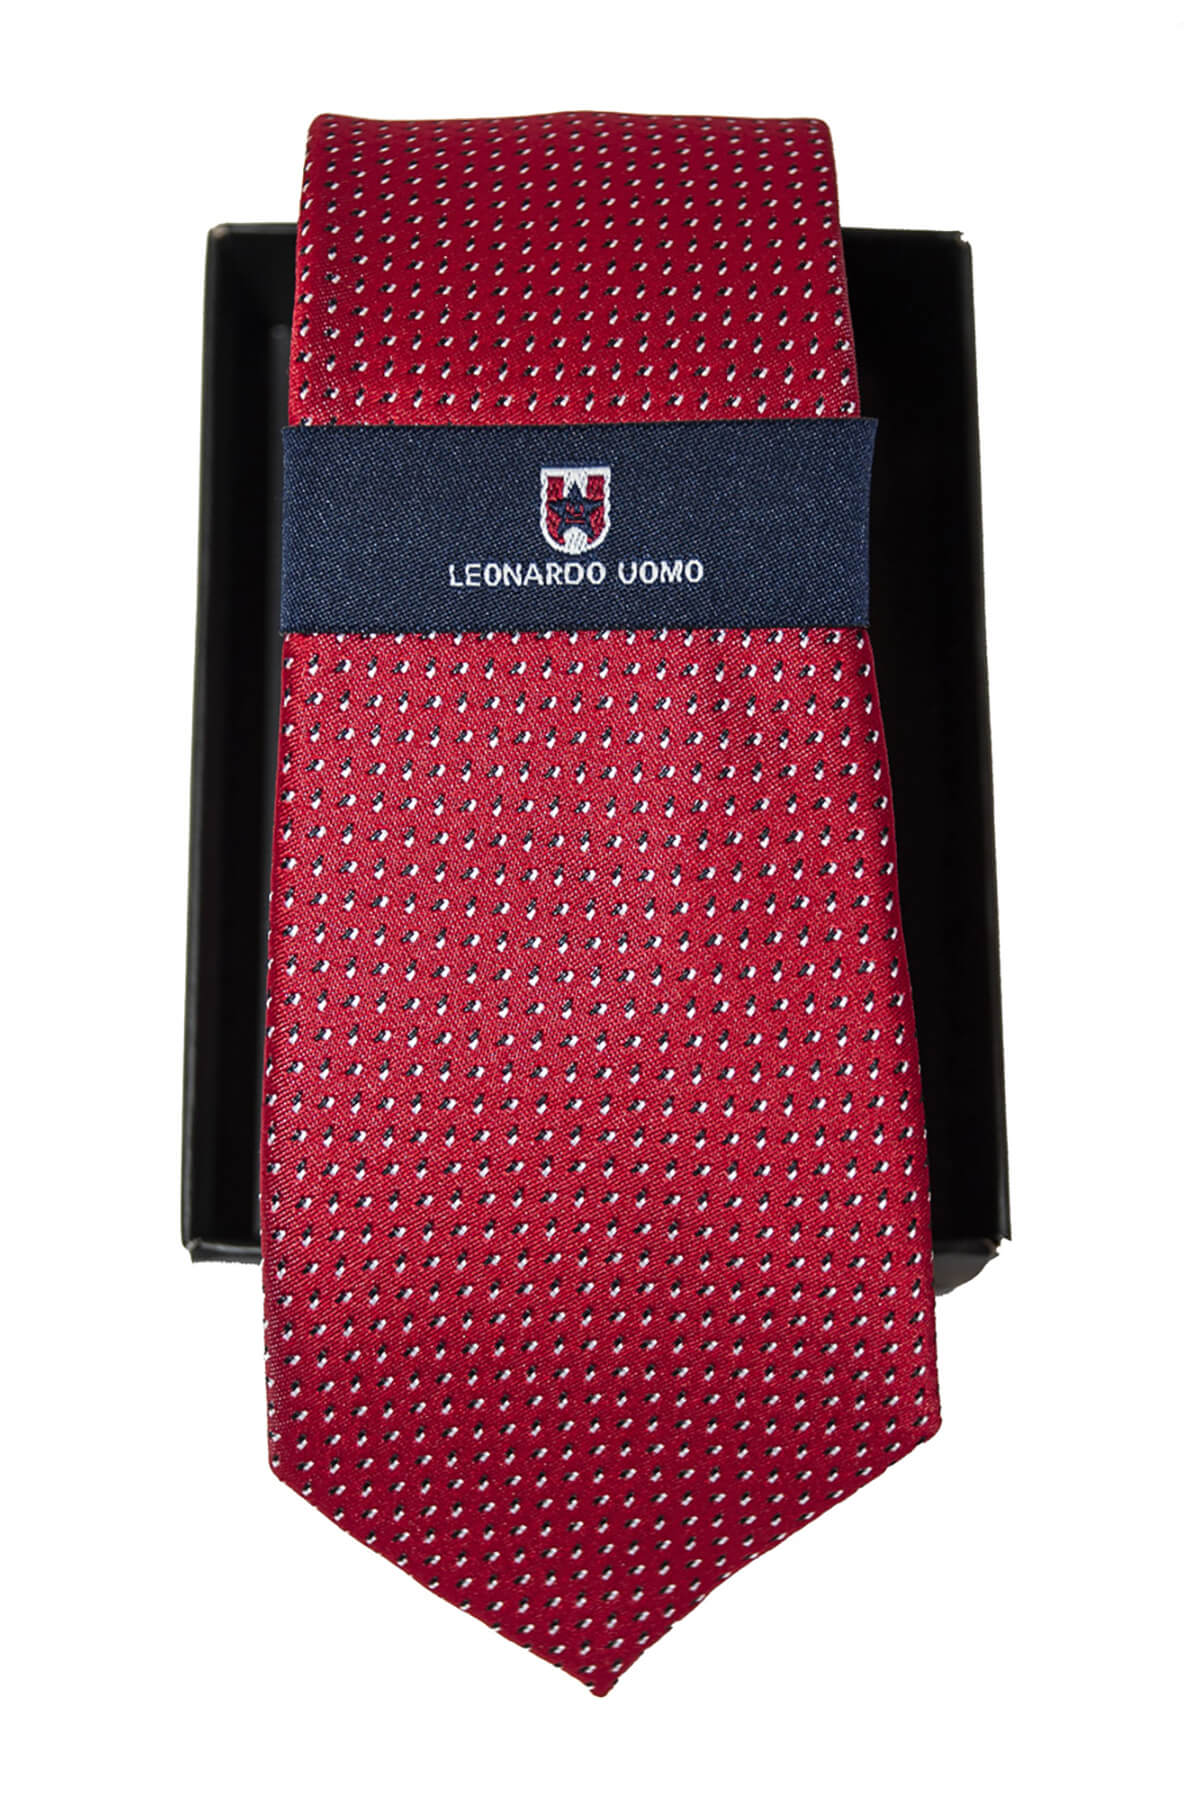 Leonardo Uomo Printed Tie